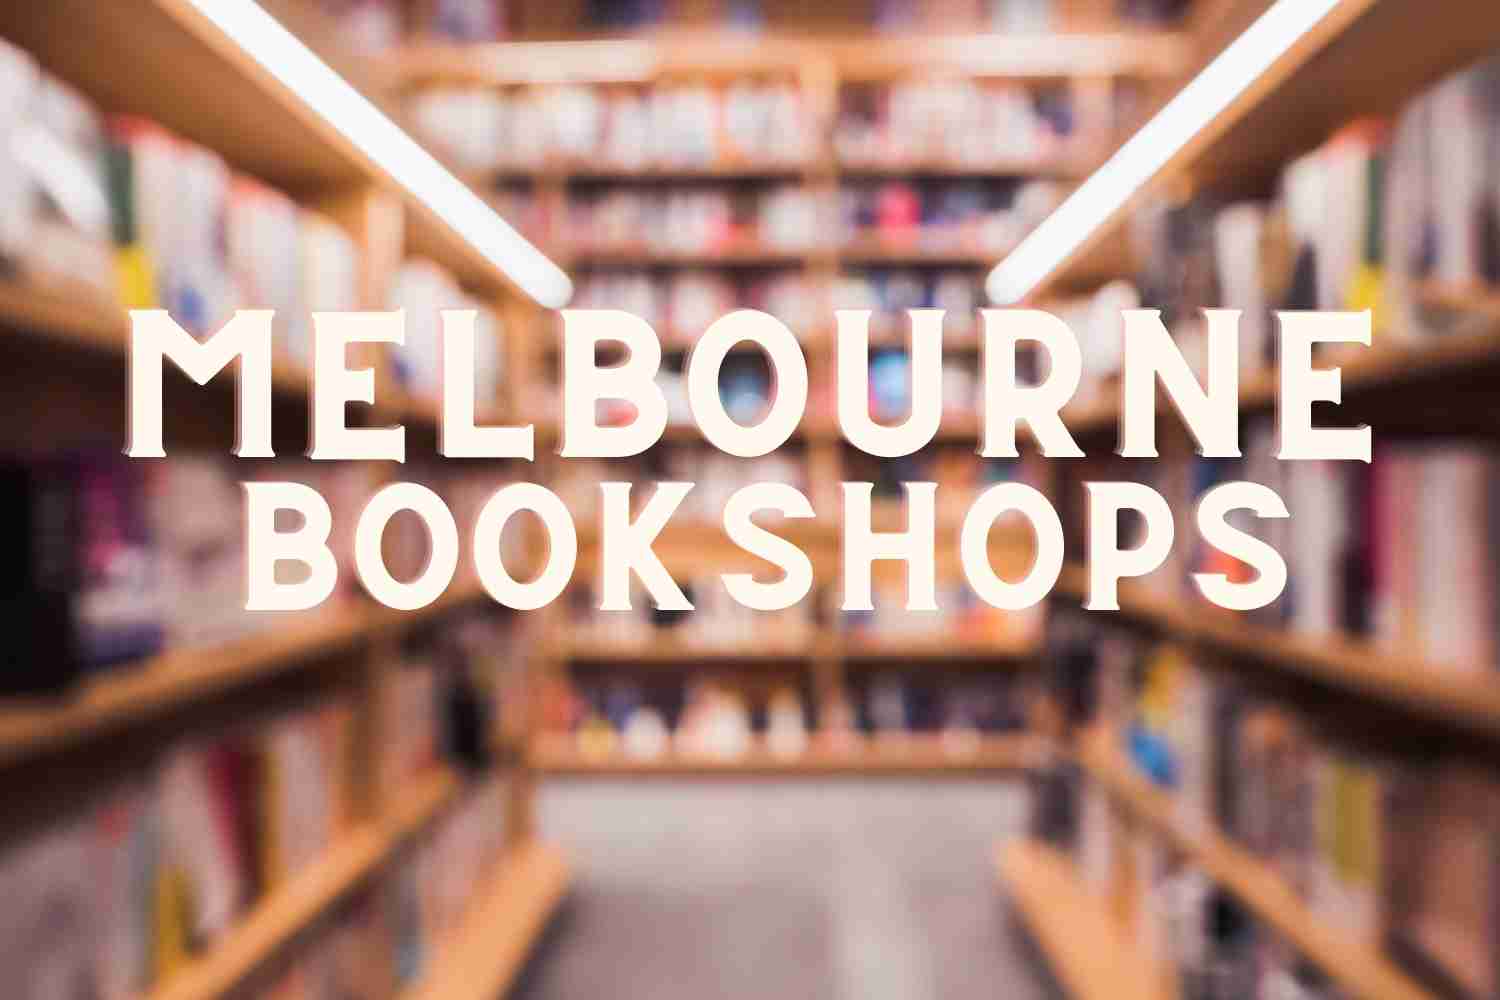 Melbourne Bookshops | The best Bookshops in Melbourne